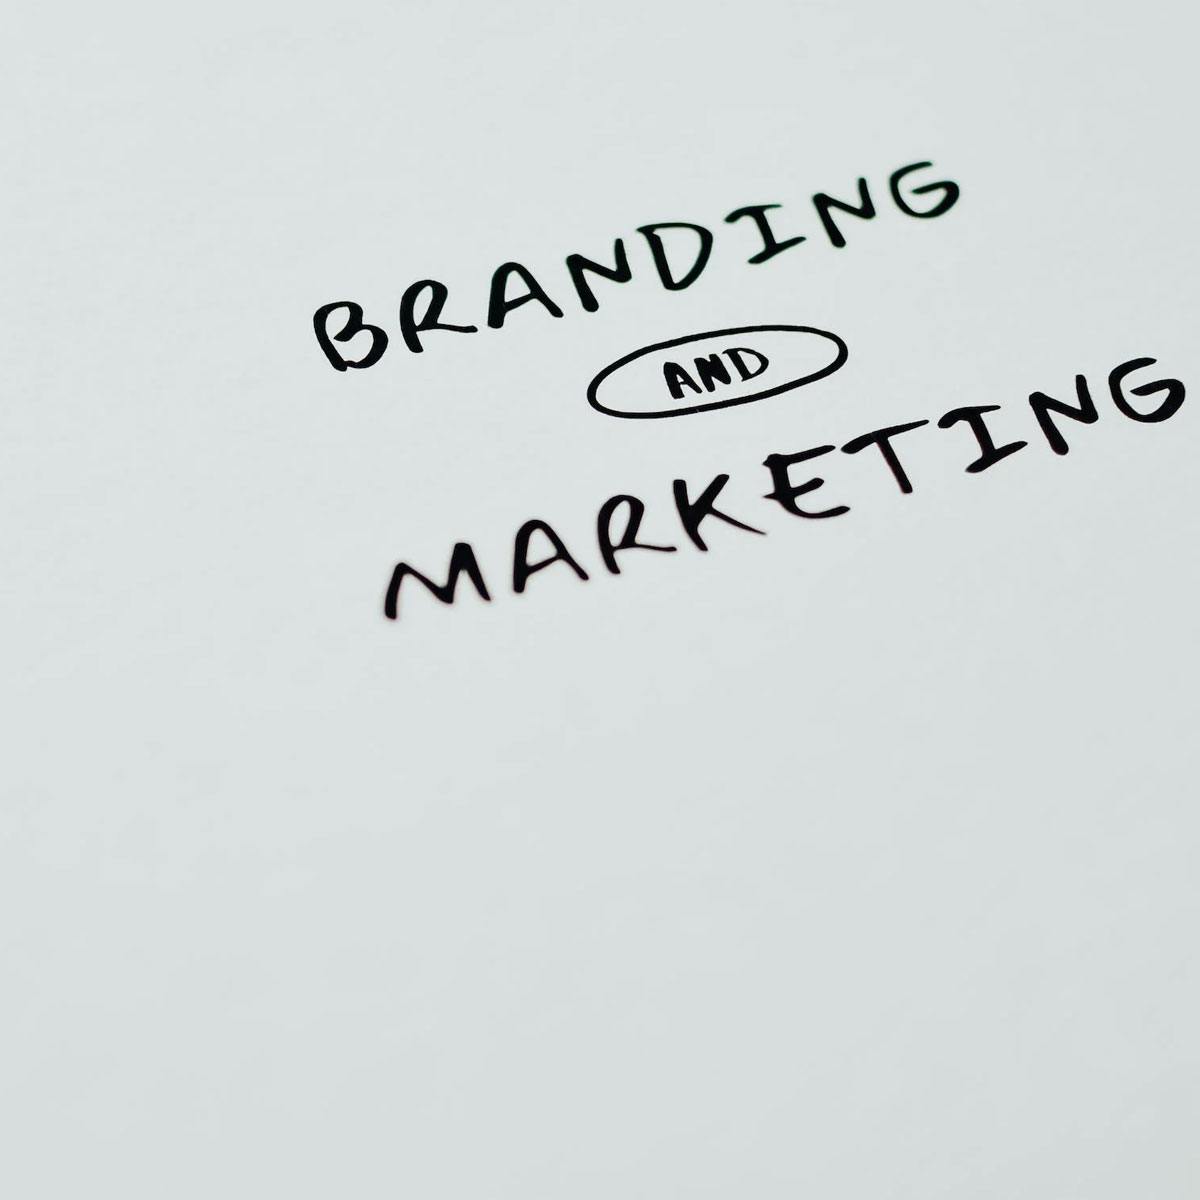 developing a personal brand on social media will define branding vs. marketing